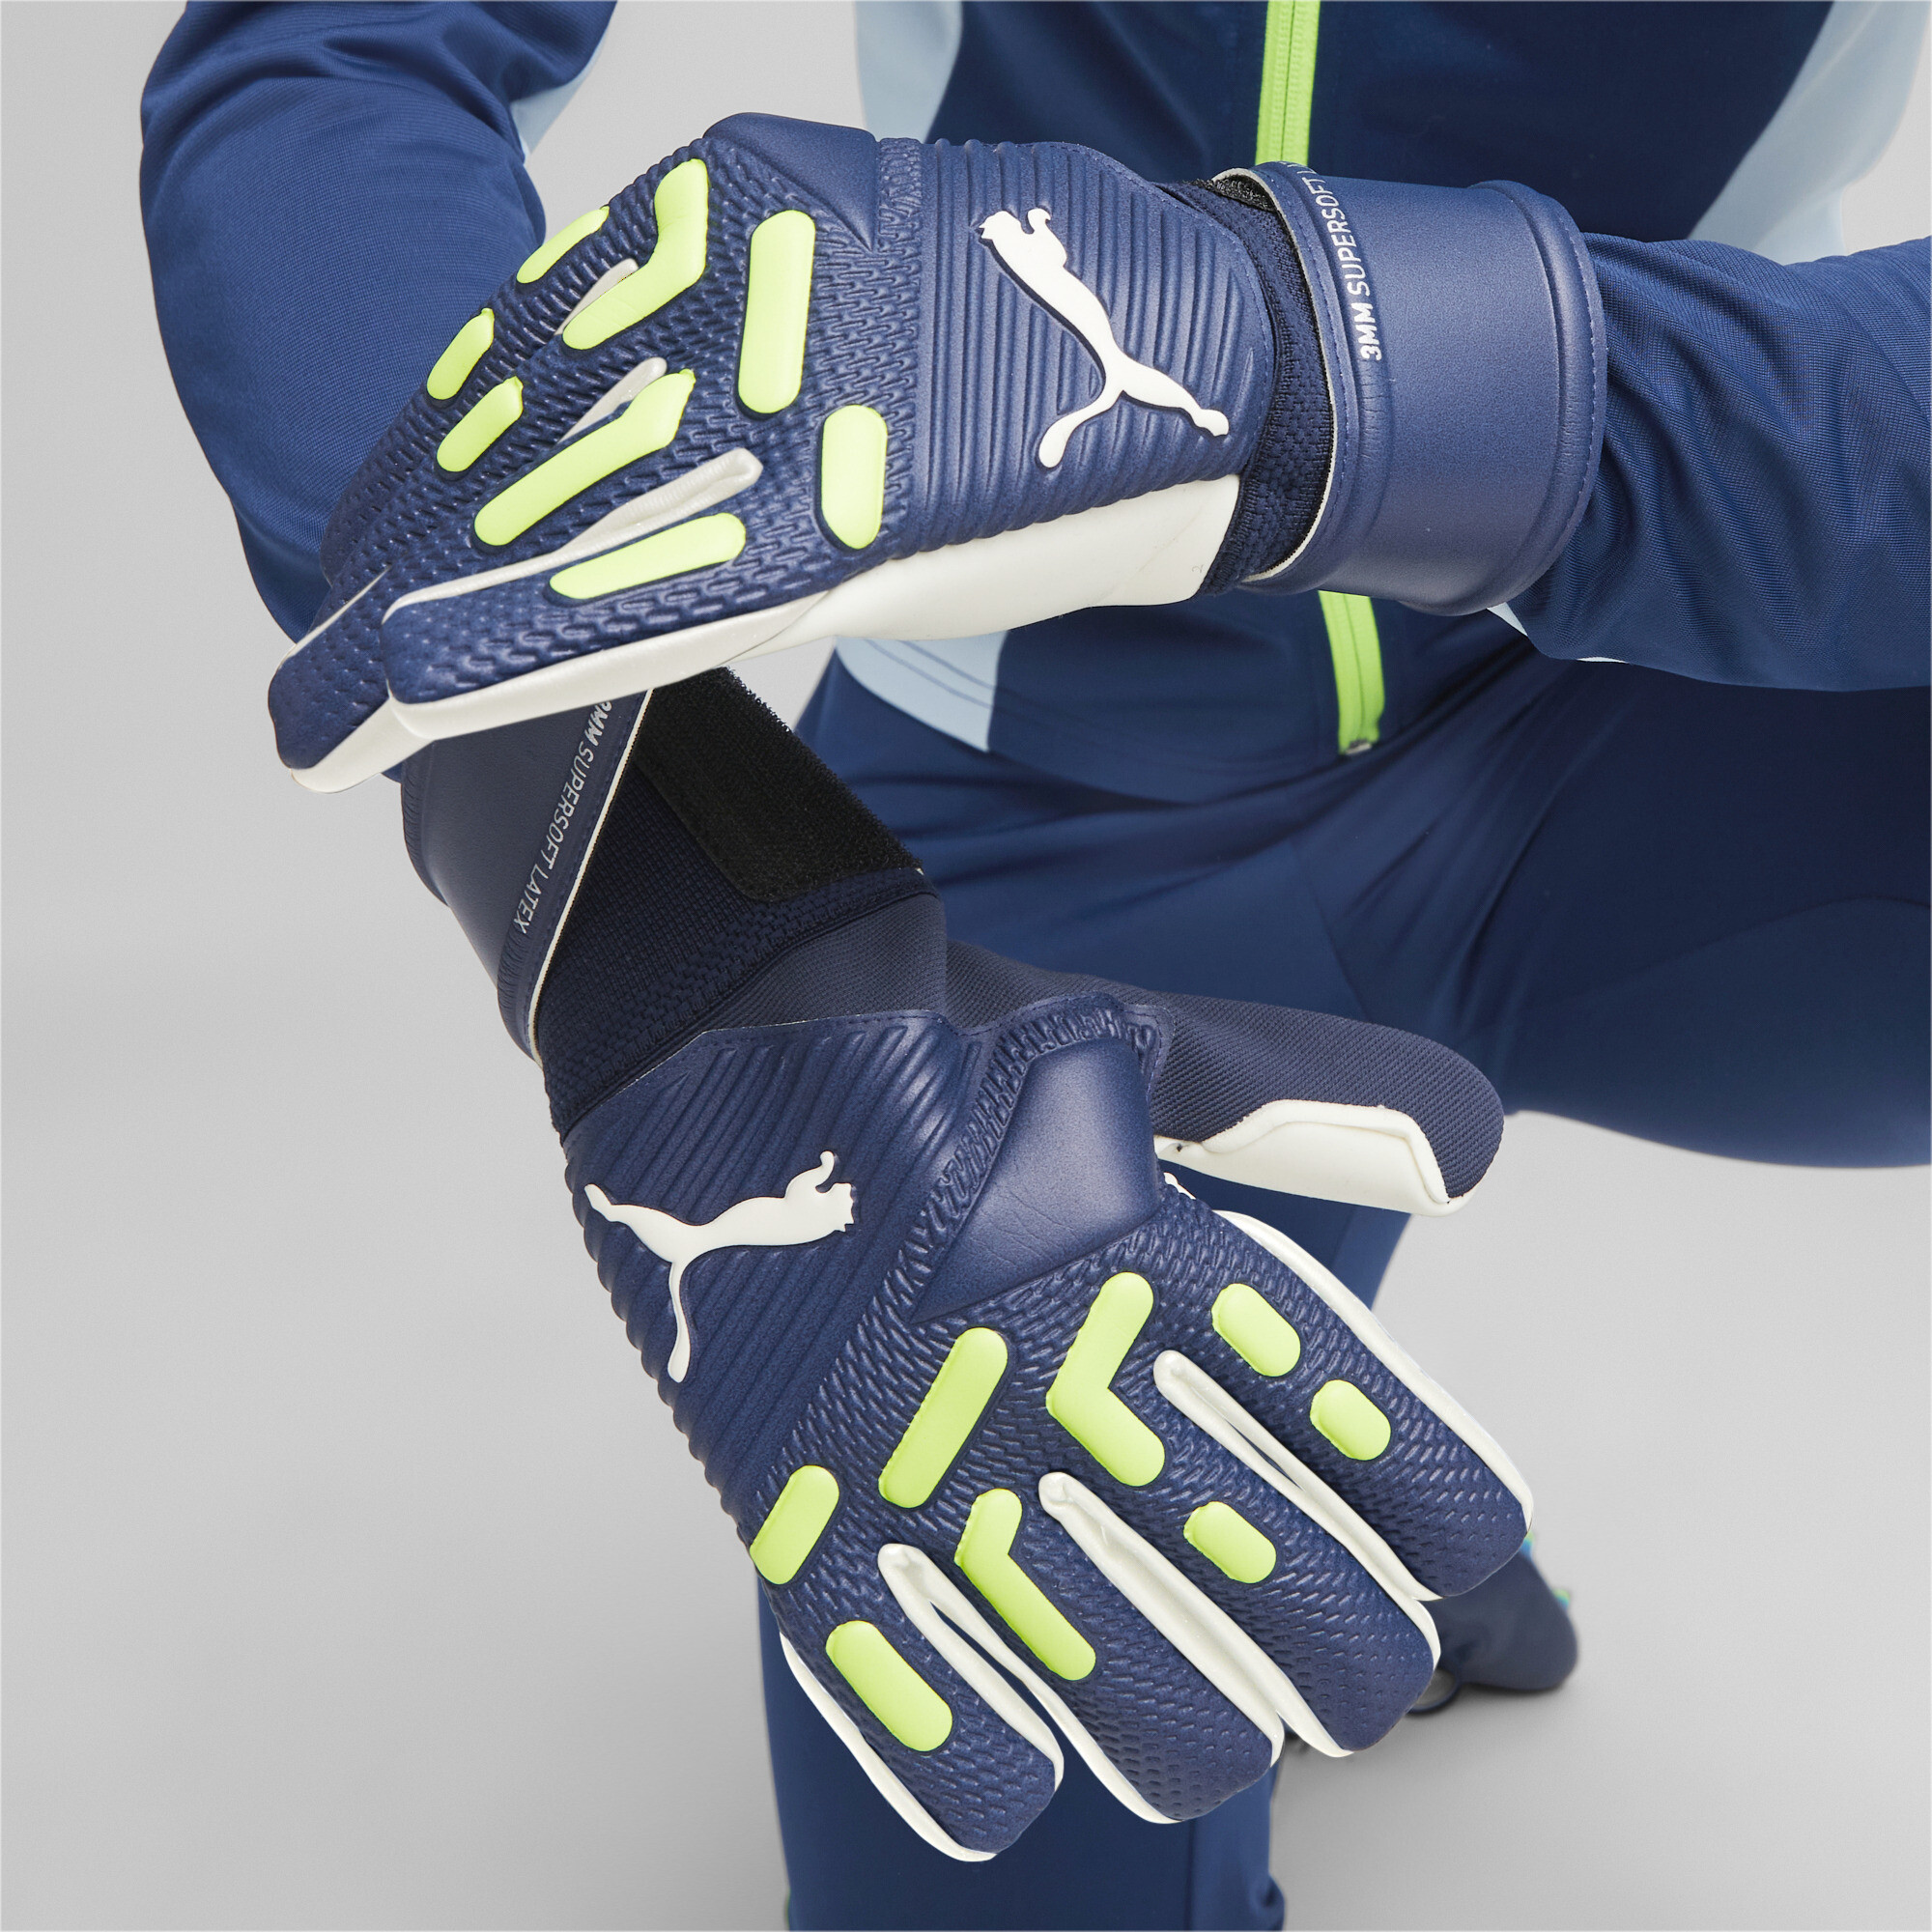 Men's Puma FUTURE Match NC Goalkeeper Gloves, Blue, Size 8, Accessories